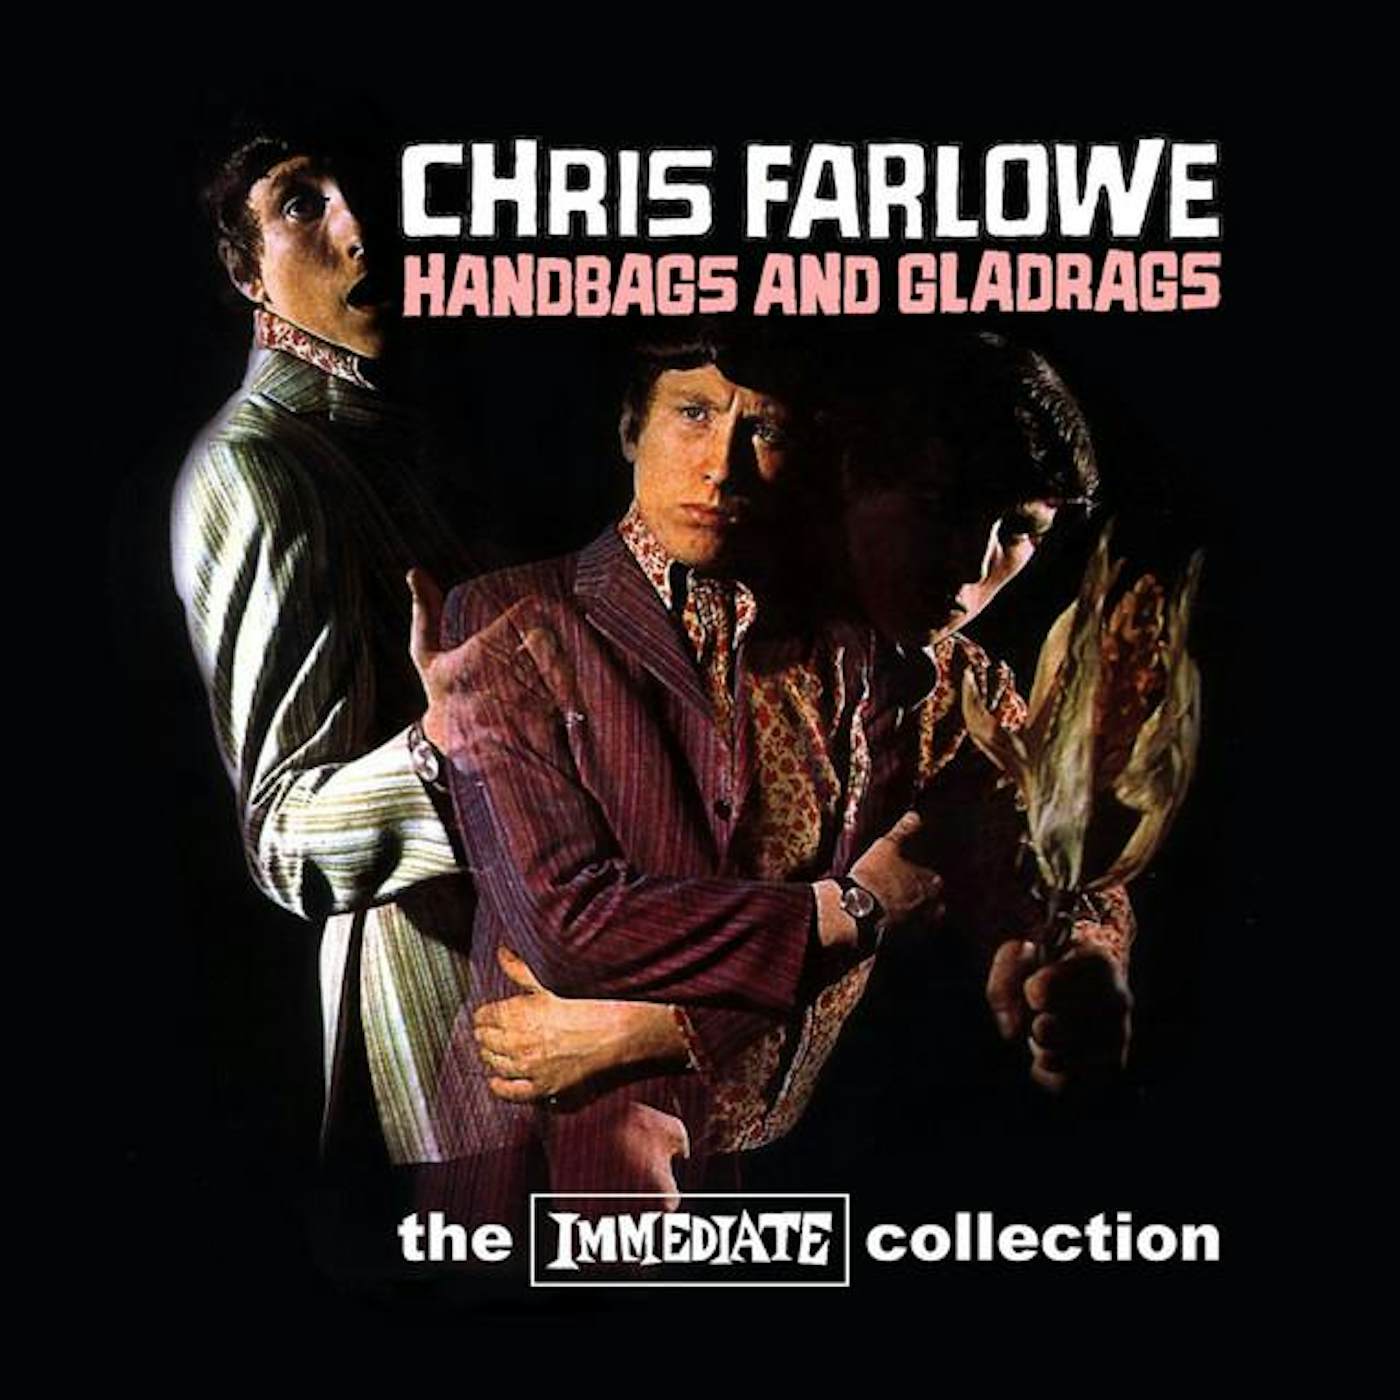 Chris Farlowe